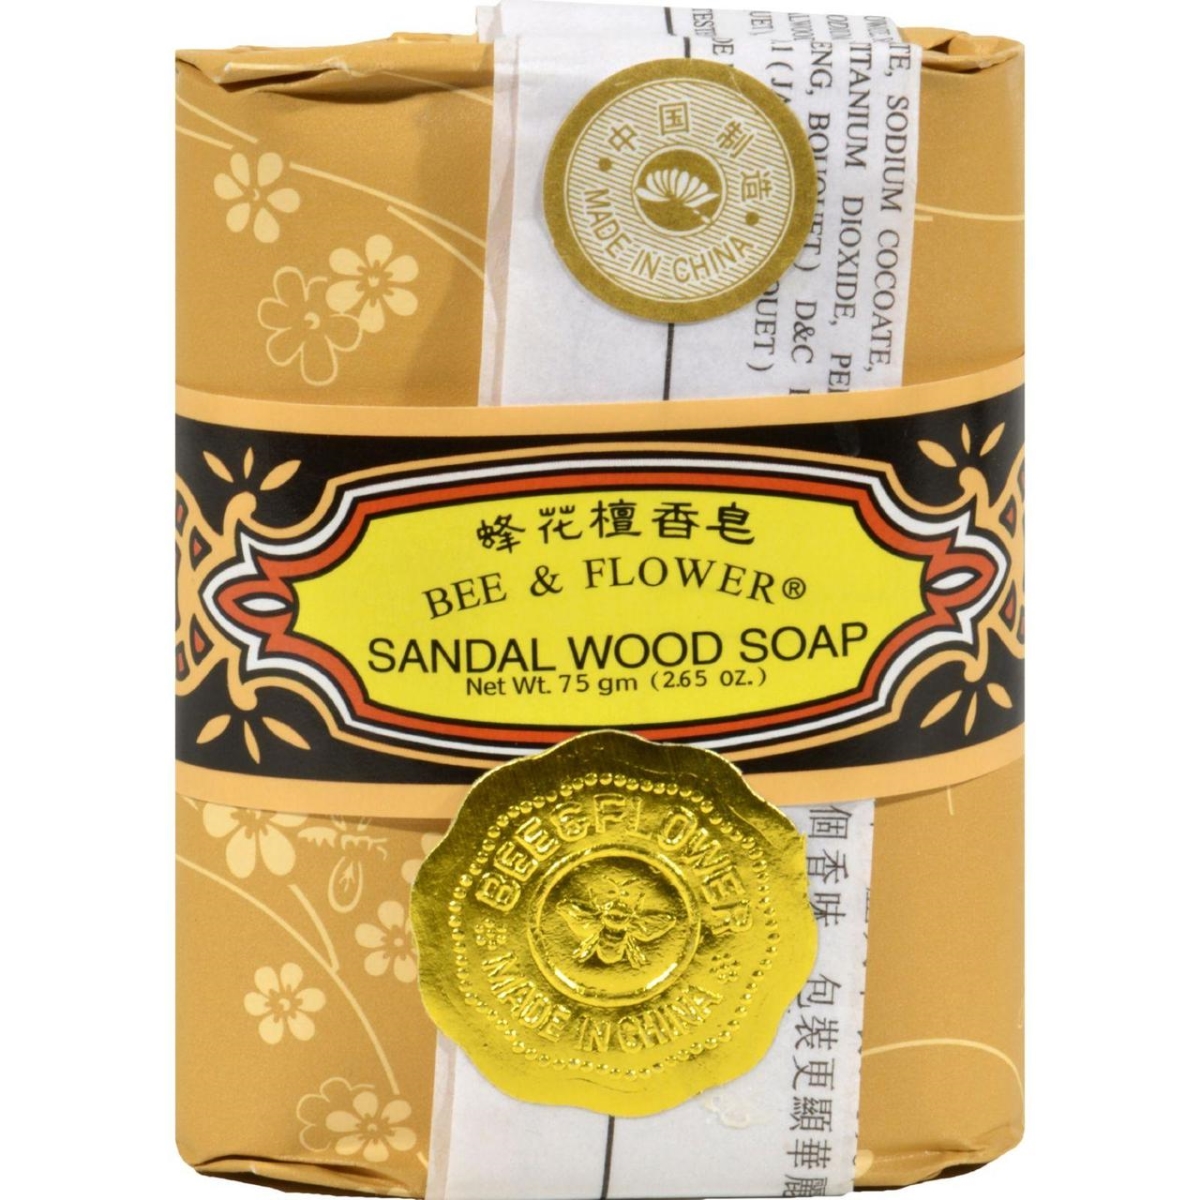 Bee And Flower Hg0108506 2.65 Oz Sandalwood Soap - Case Of 12